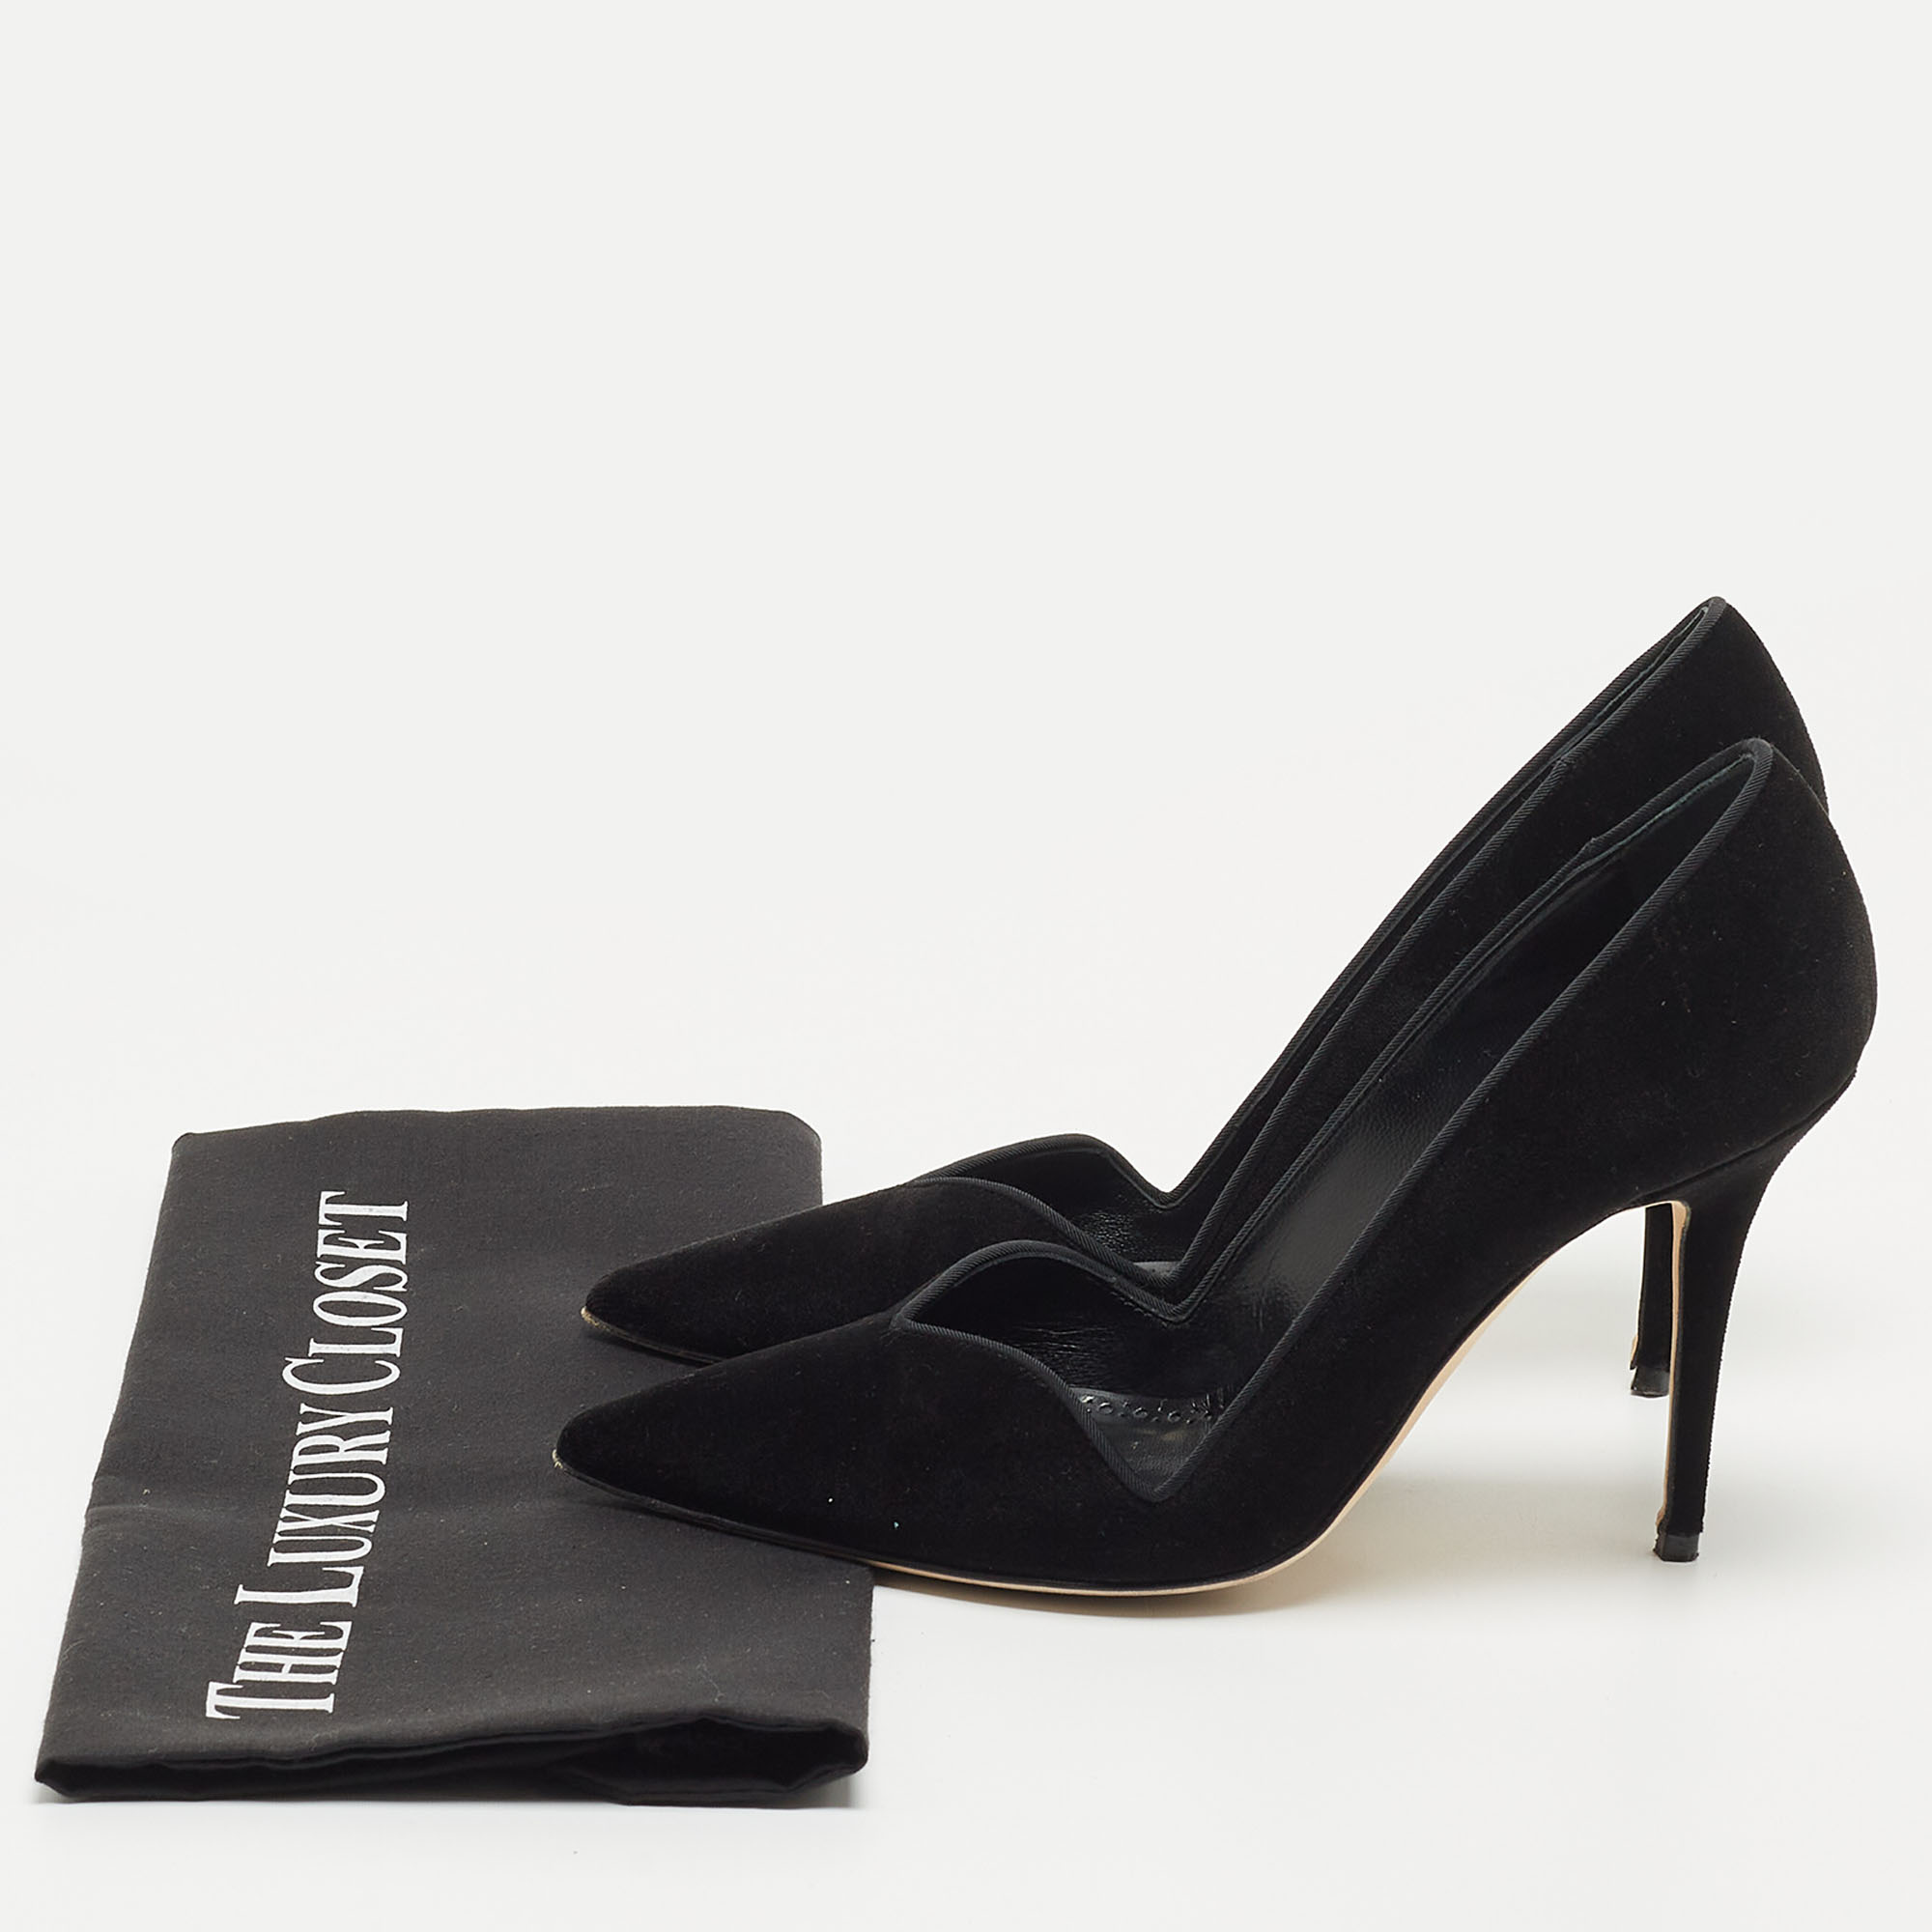 Manolo Blahnik Black Velvet Pointed Toe Pumps Size 36.5